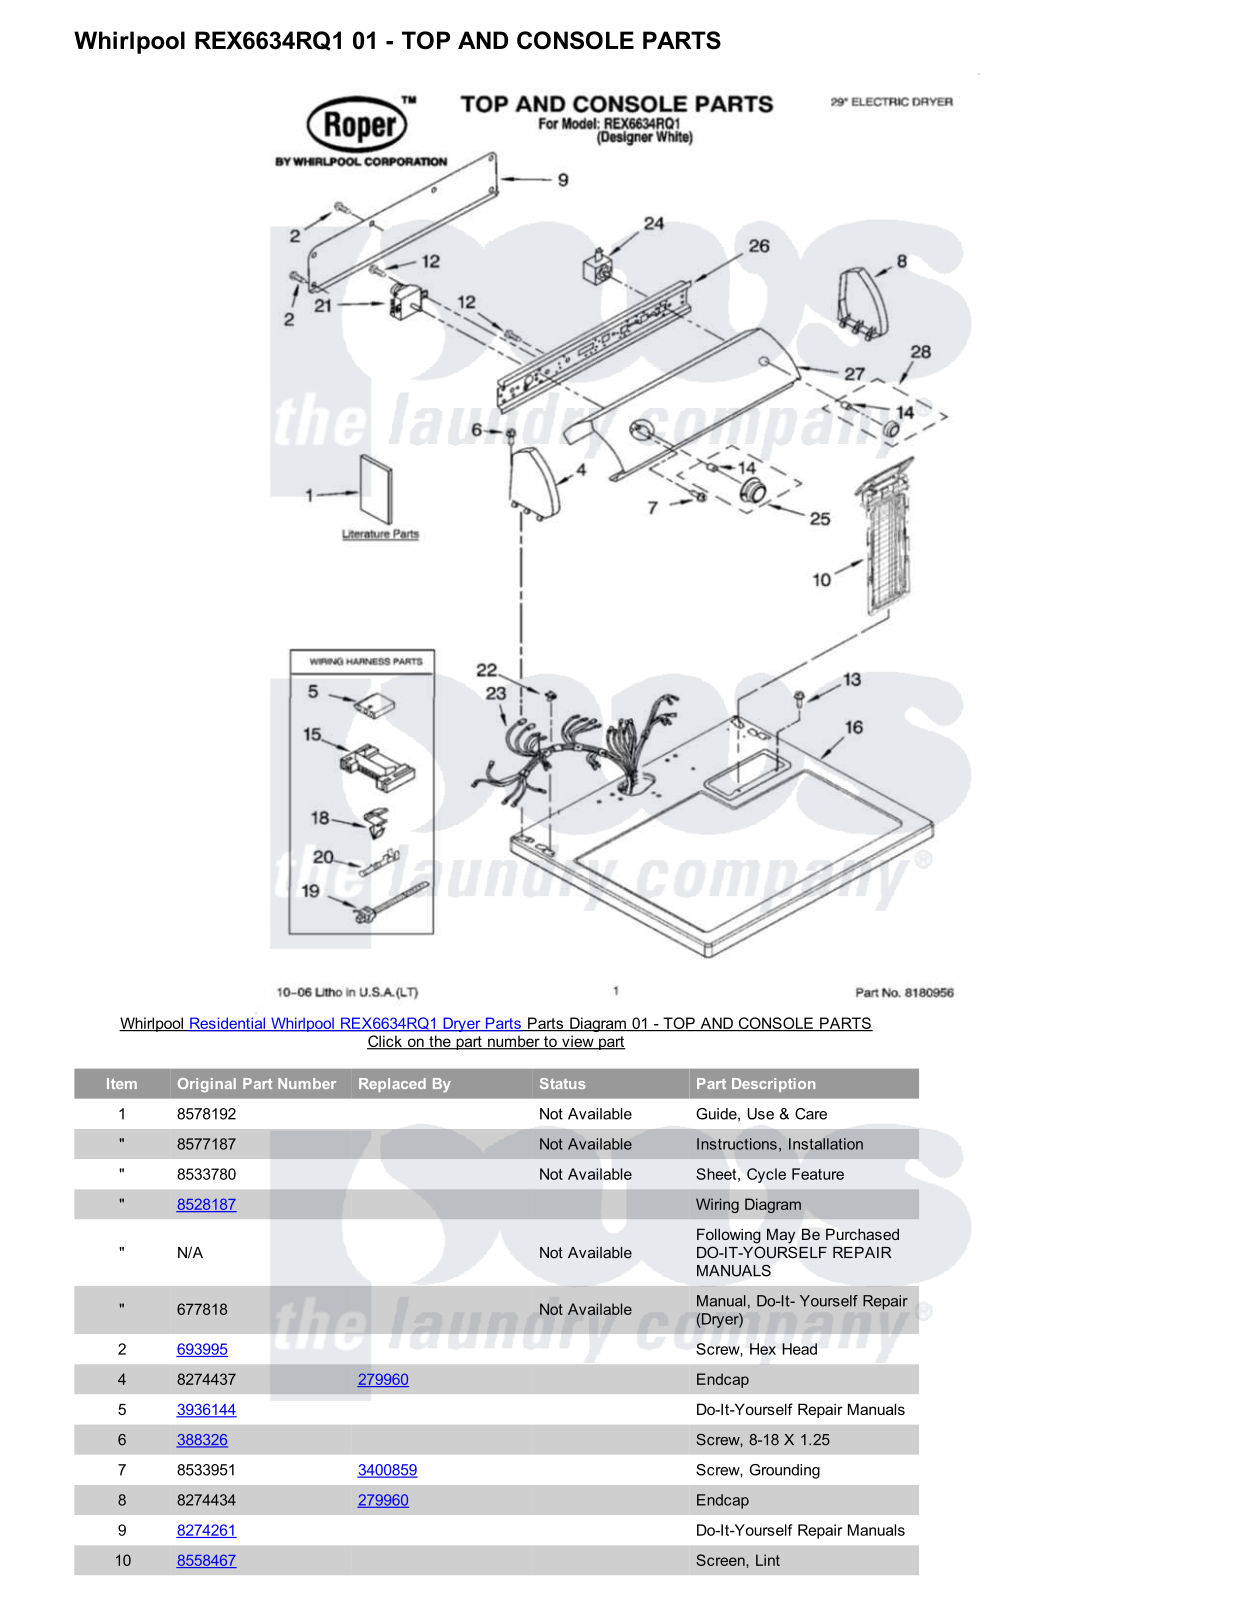 Whirlpool REX6634RQ1 Parts Diagram